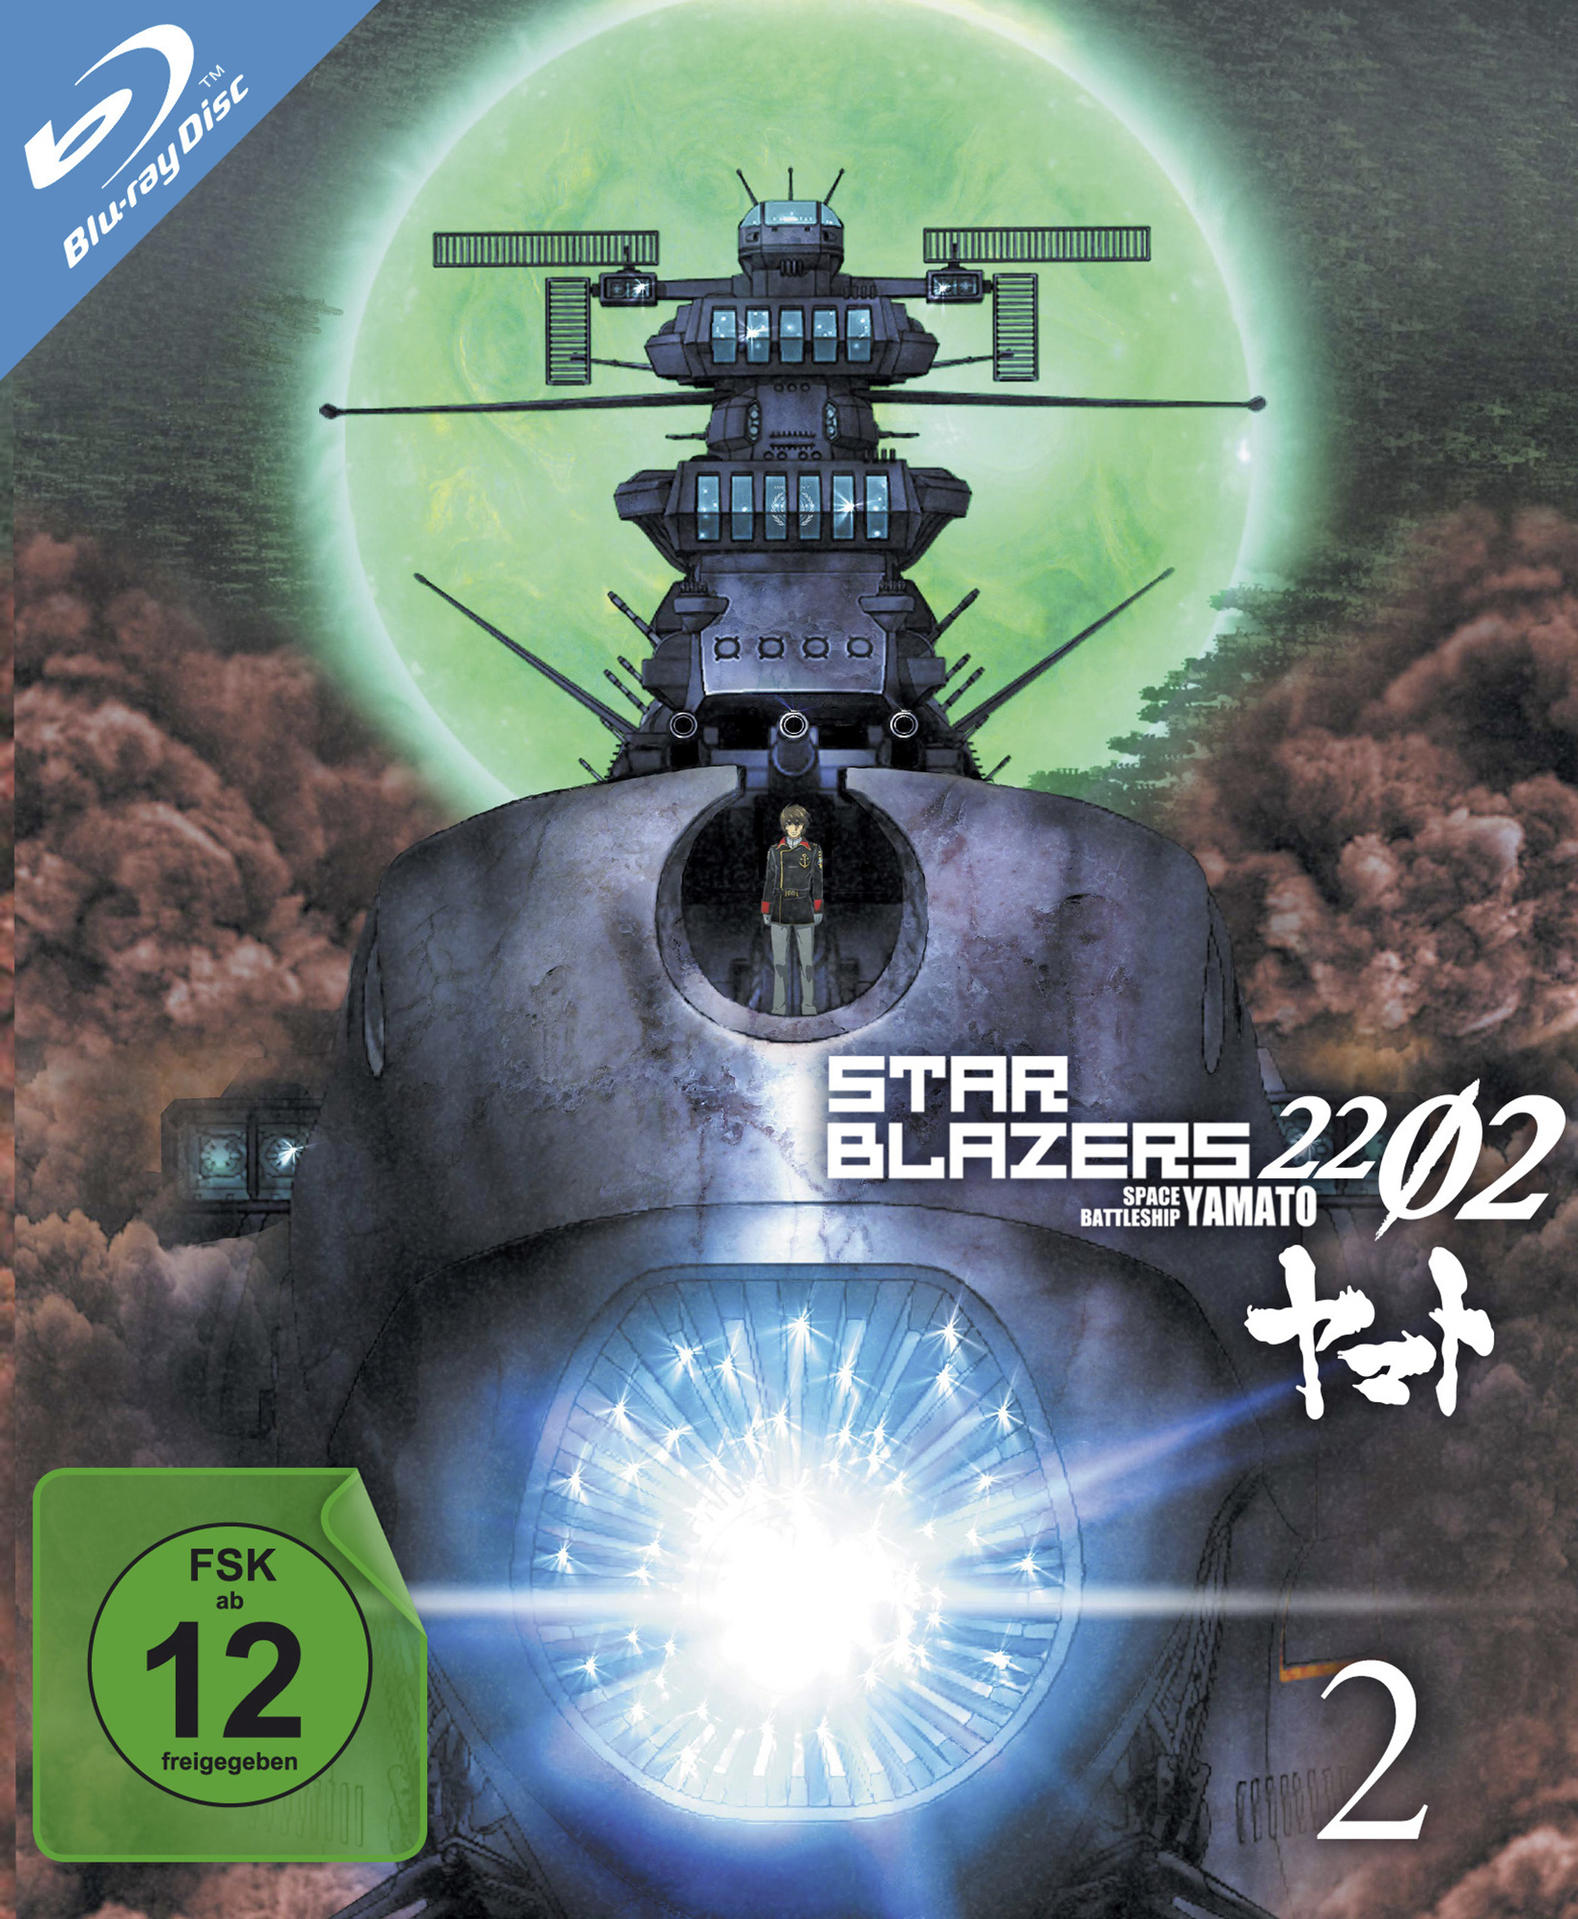 Vol.2 Blazers Battleship 2202 Space Star - - Yamato Blu-ray